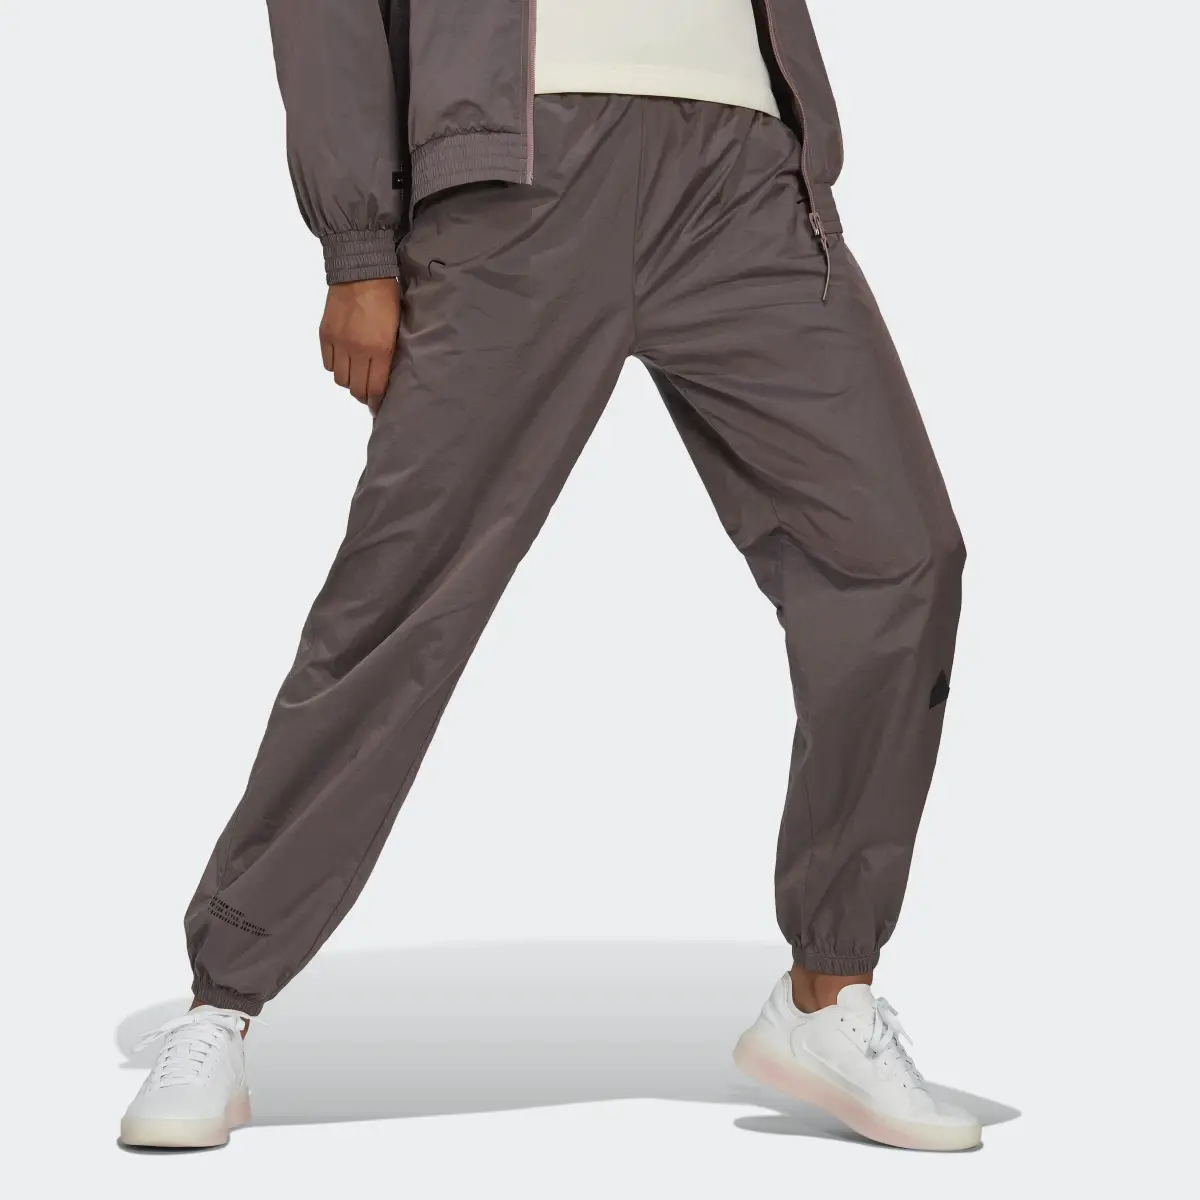 Adidas Woven Pants. 1